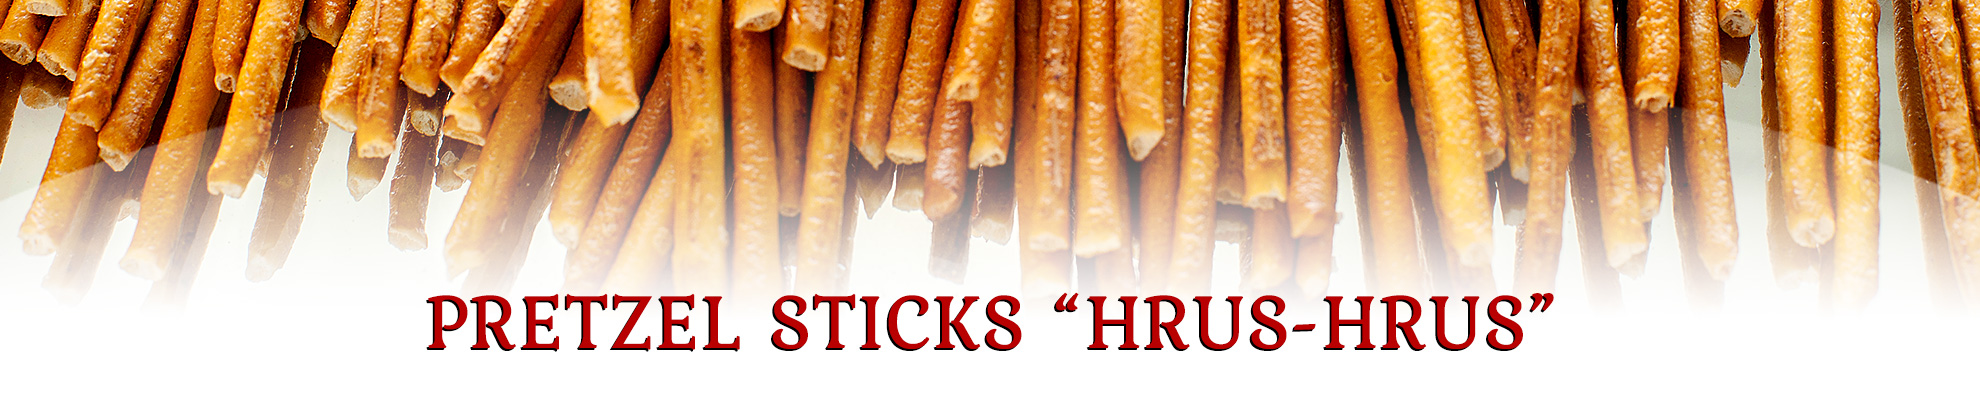 Pretzel sticks “HRUS-HRUS”